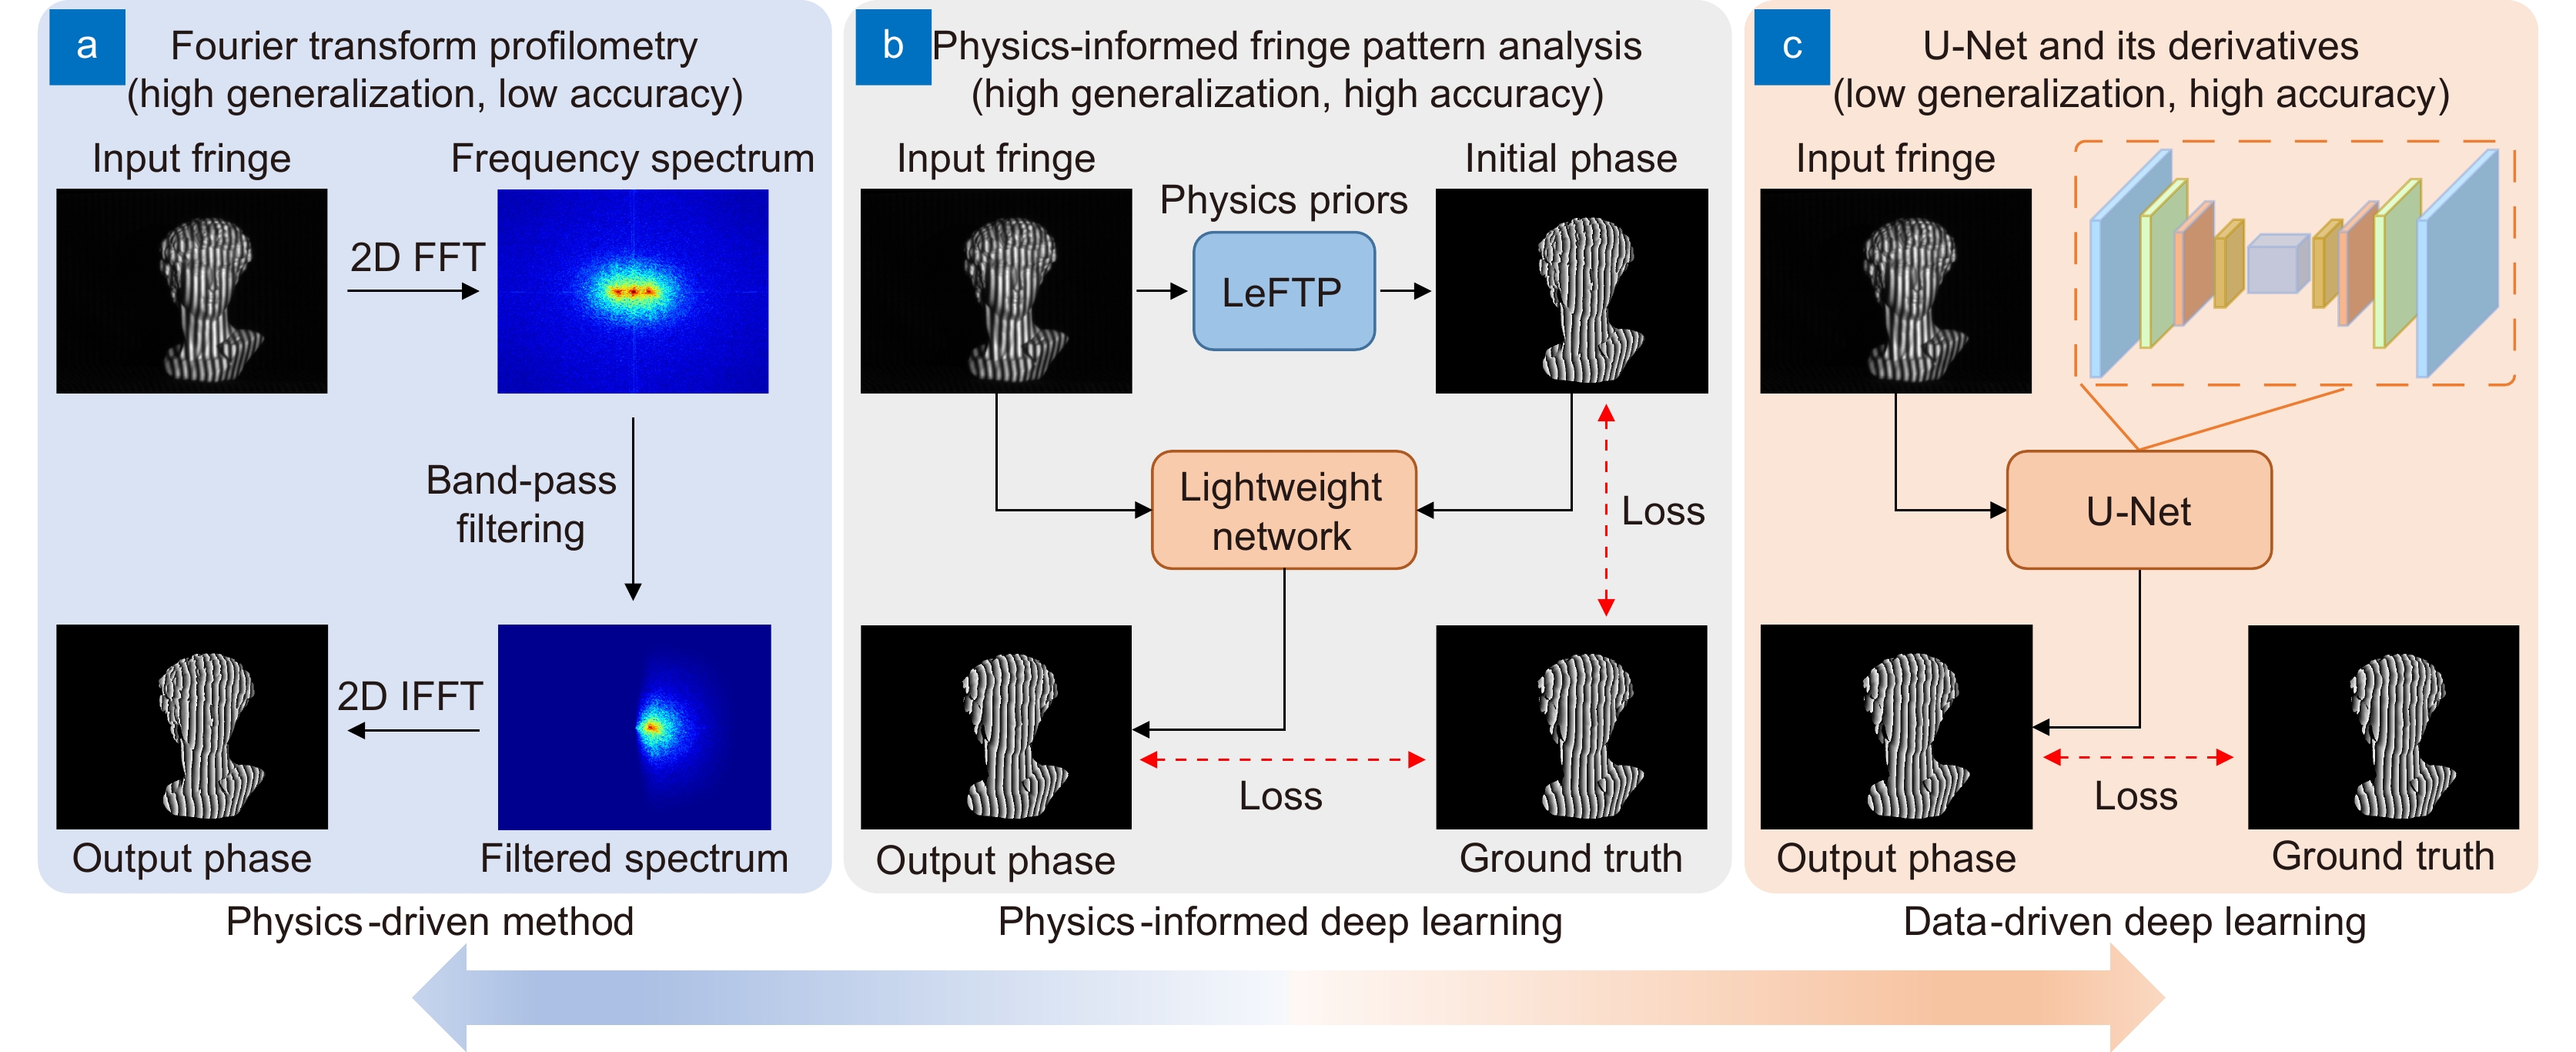 Physics-informed deep learning for fringe pattern analysis_4